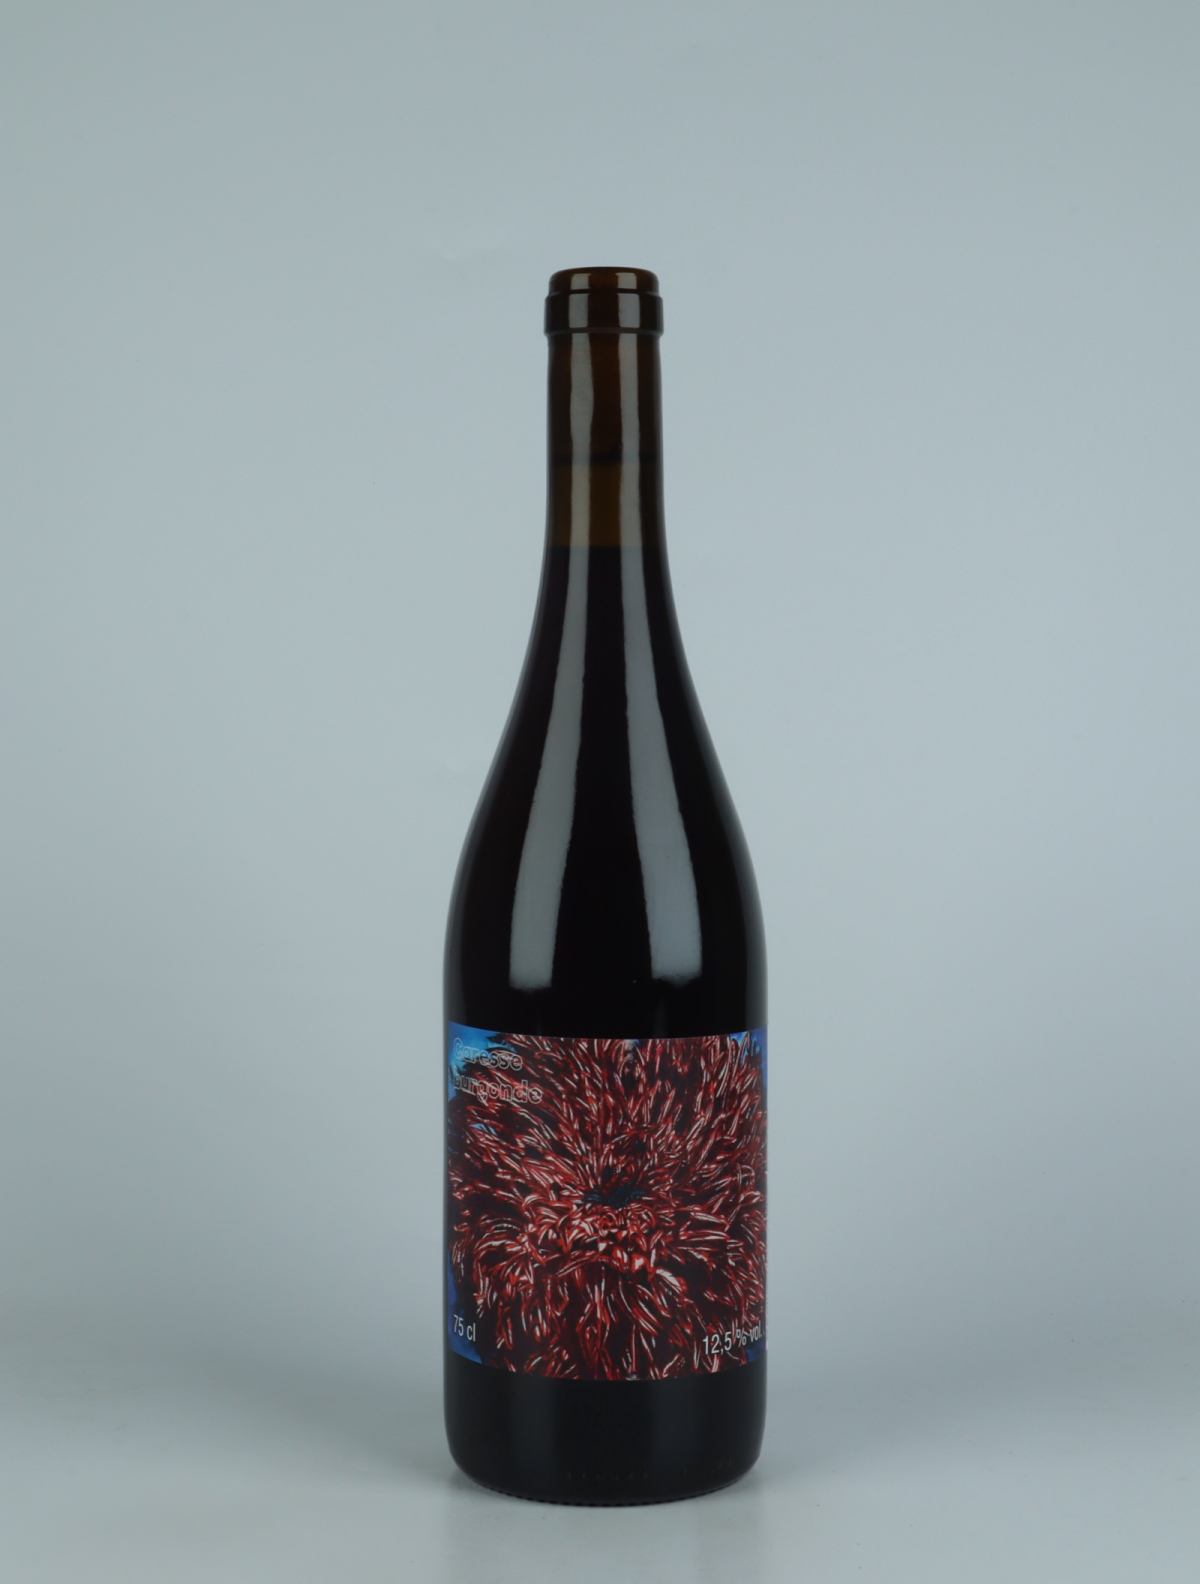 A bottle 2022 Caresse Burgonde - Pinot Noir Red wine from Les Vins du Fab, Neuchâtel in Switzerland